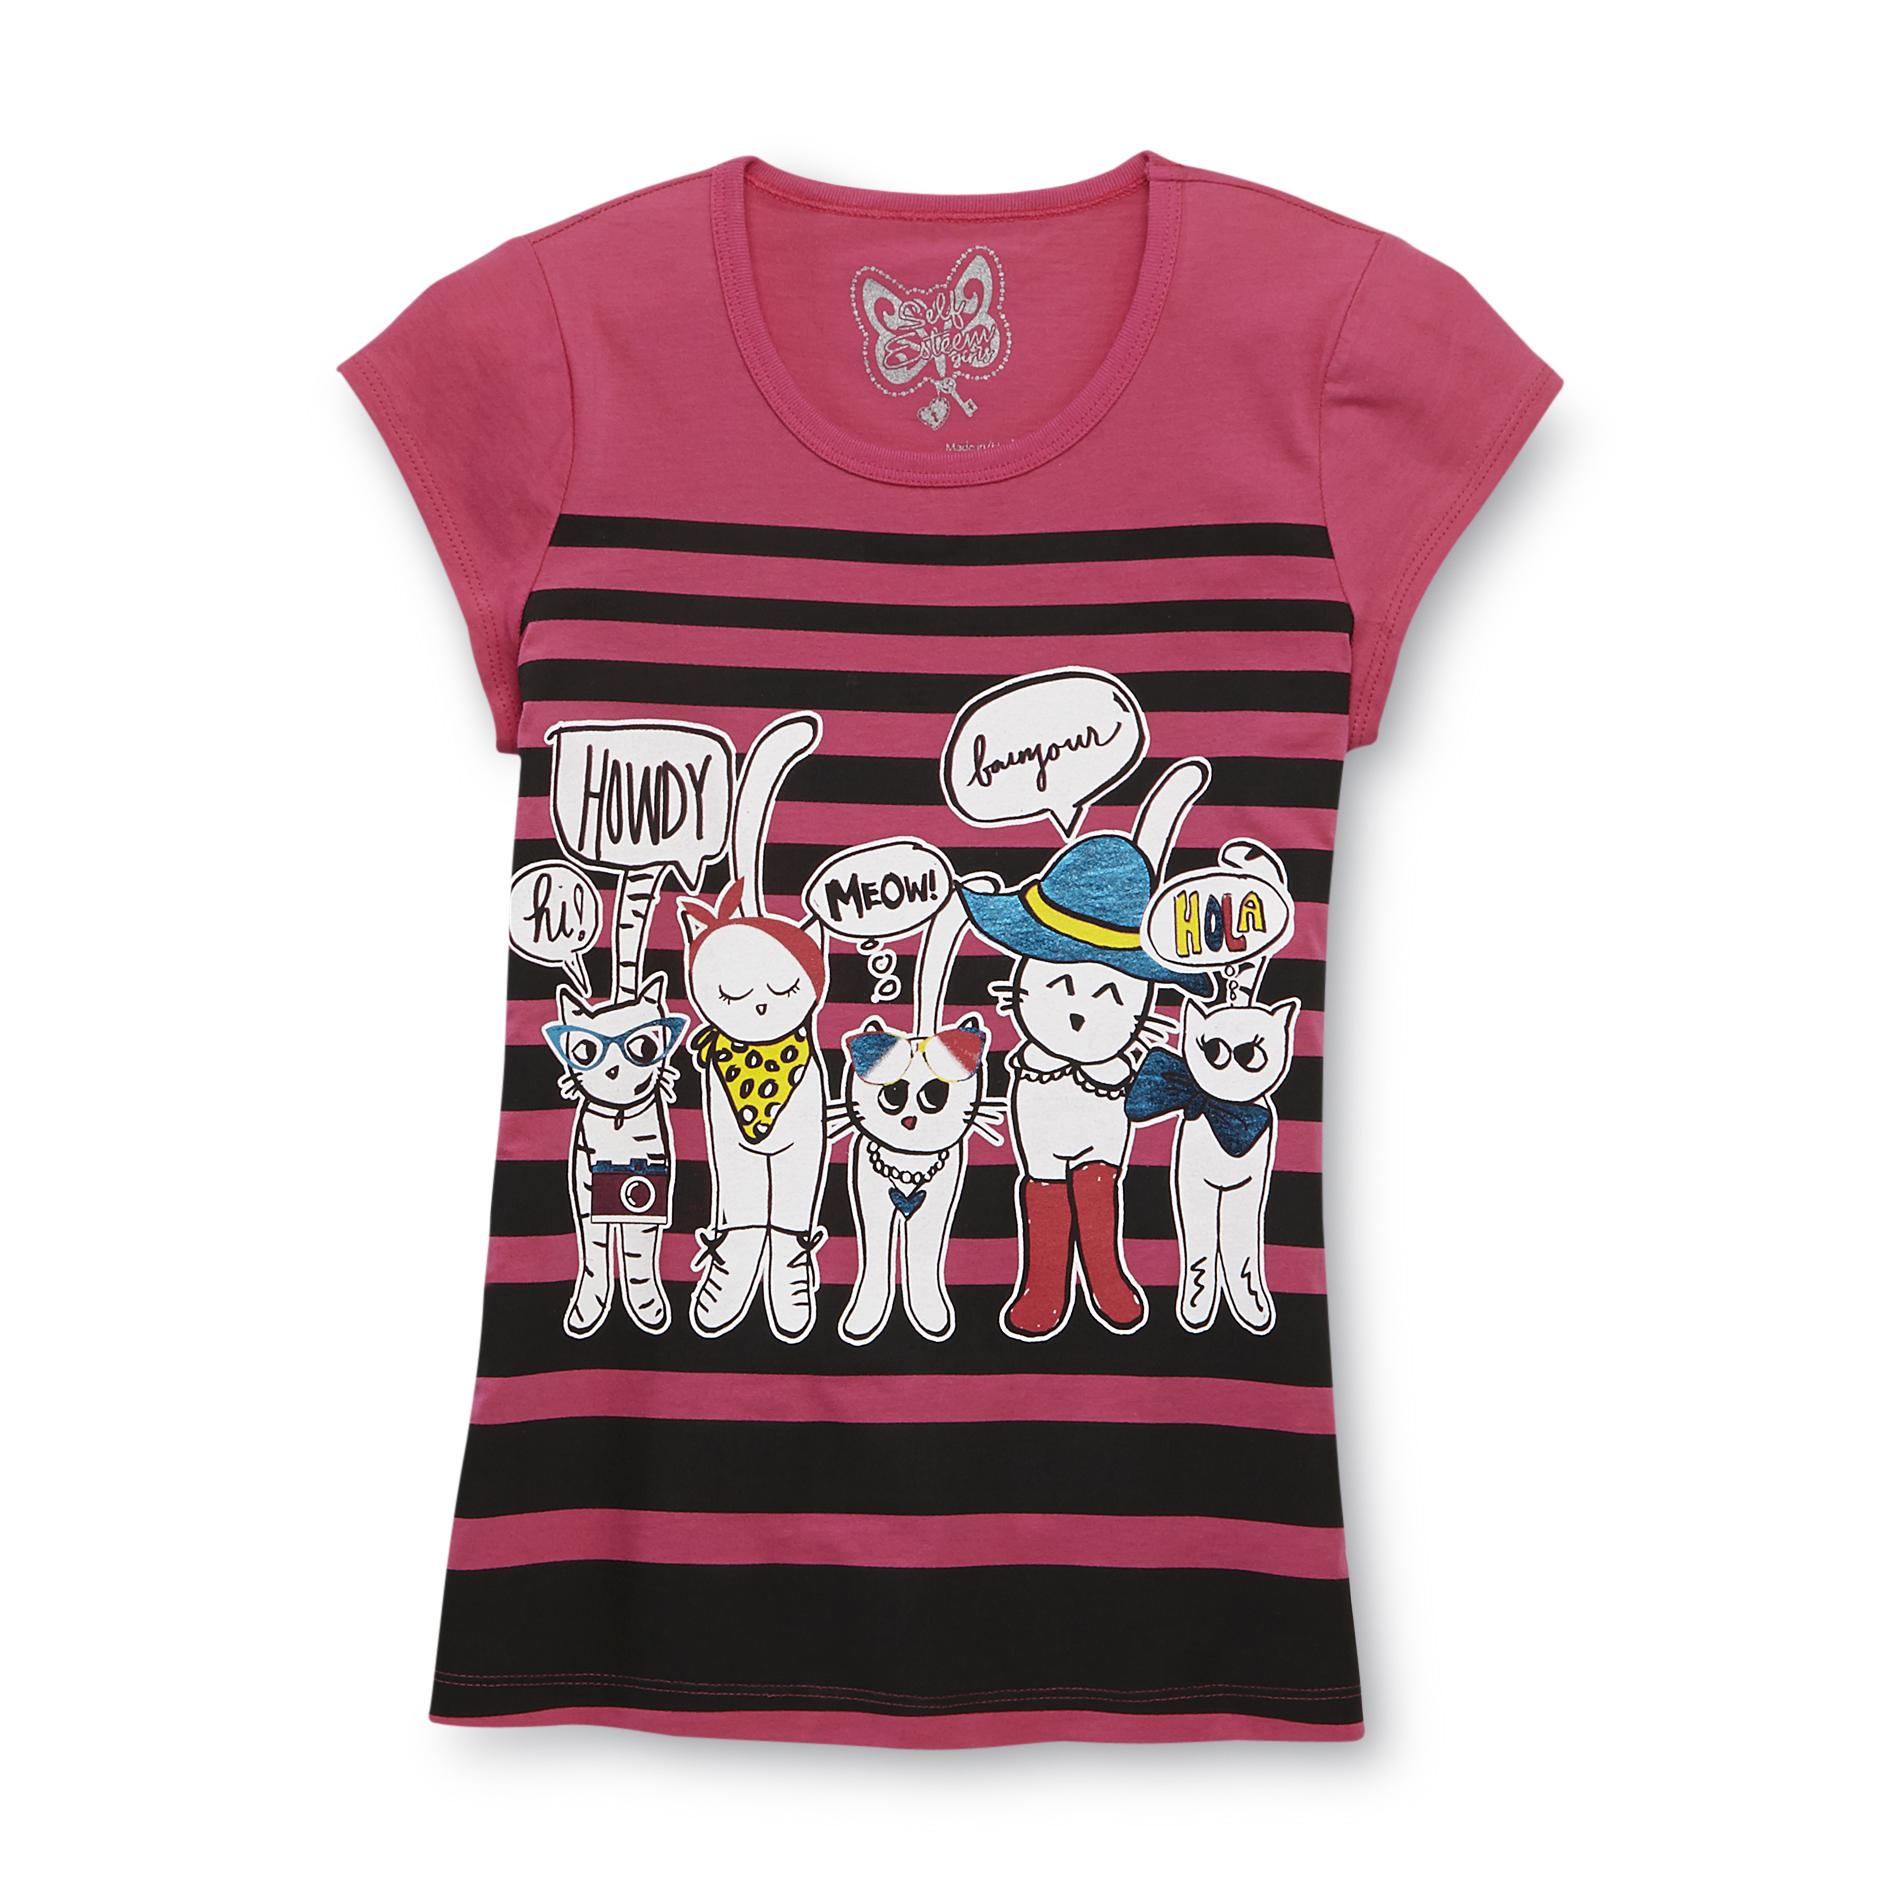 Self Esteem Girl's Graphic T-Shirt - Cats